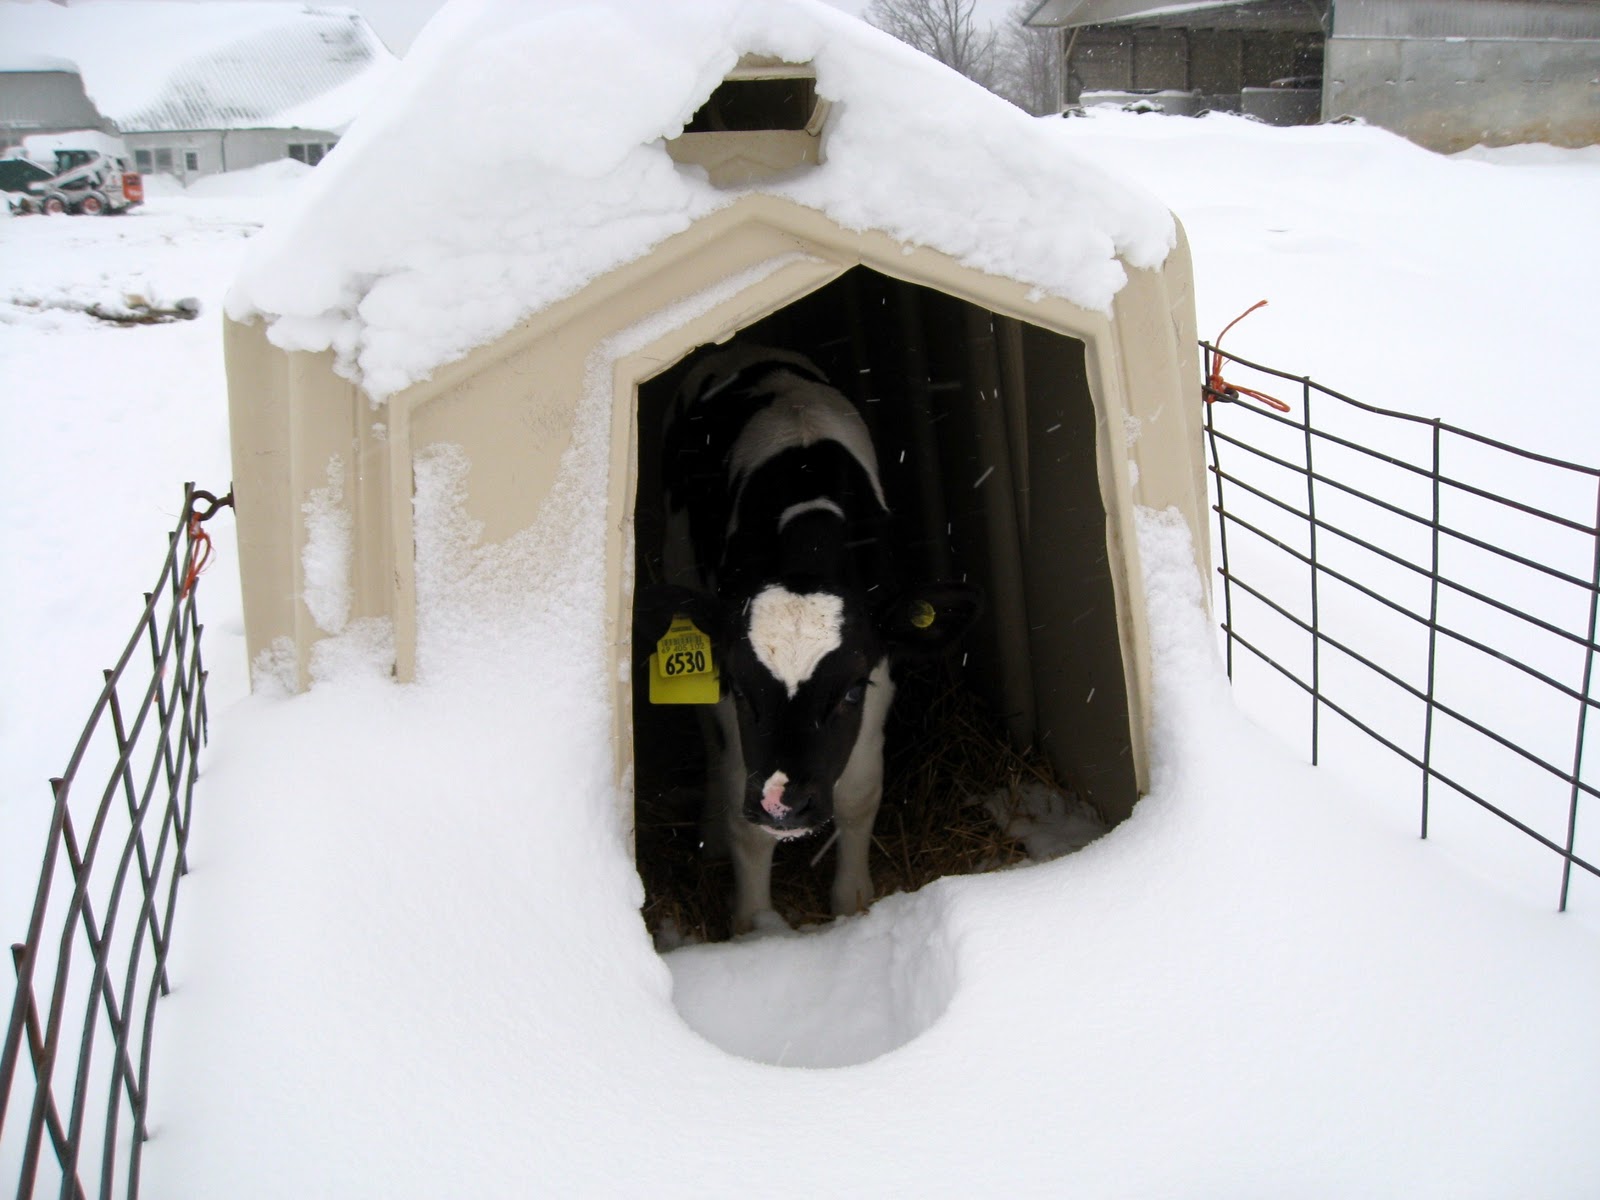 4_Calf+in+hutch+with+snow_Dec+2010.jpg